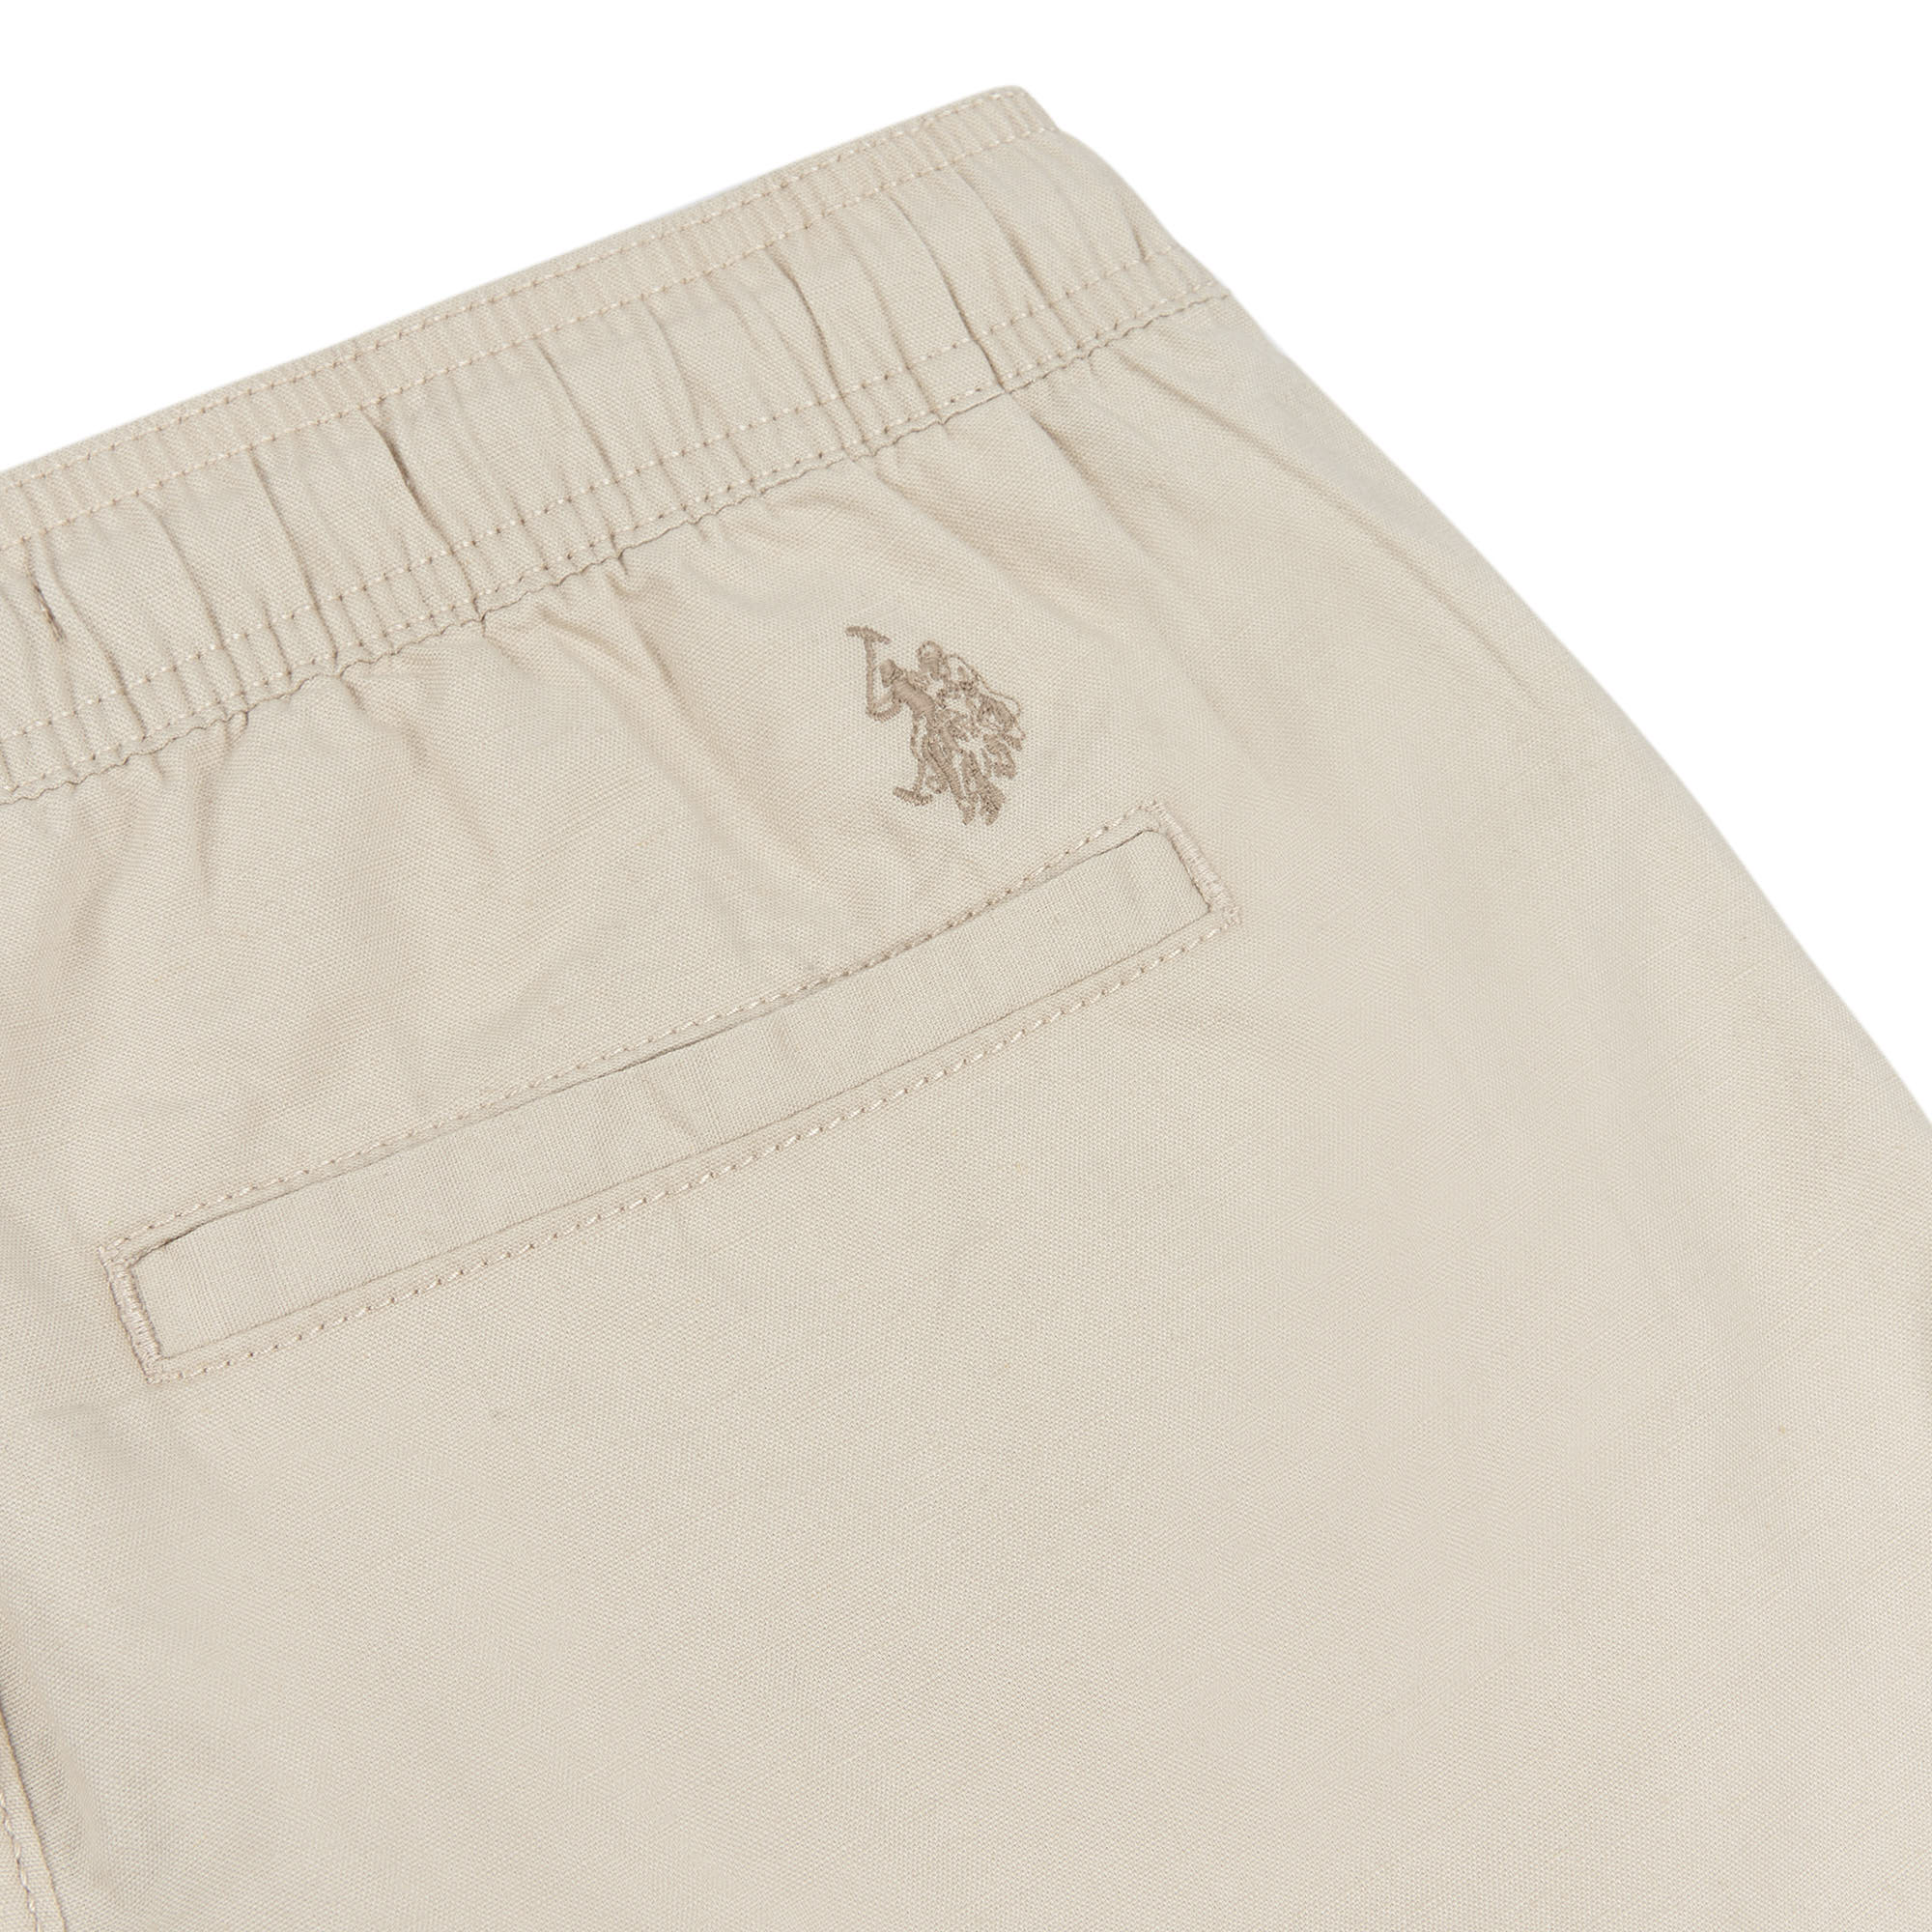 Mens Linen Blend Deck Shorts in French Oak